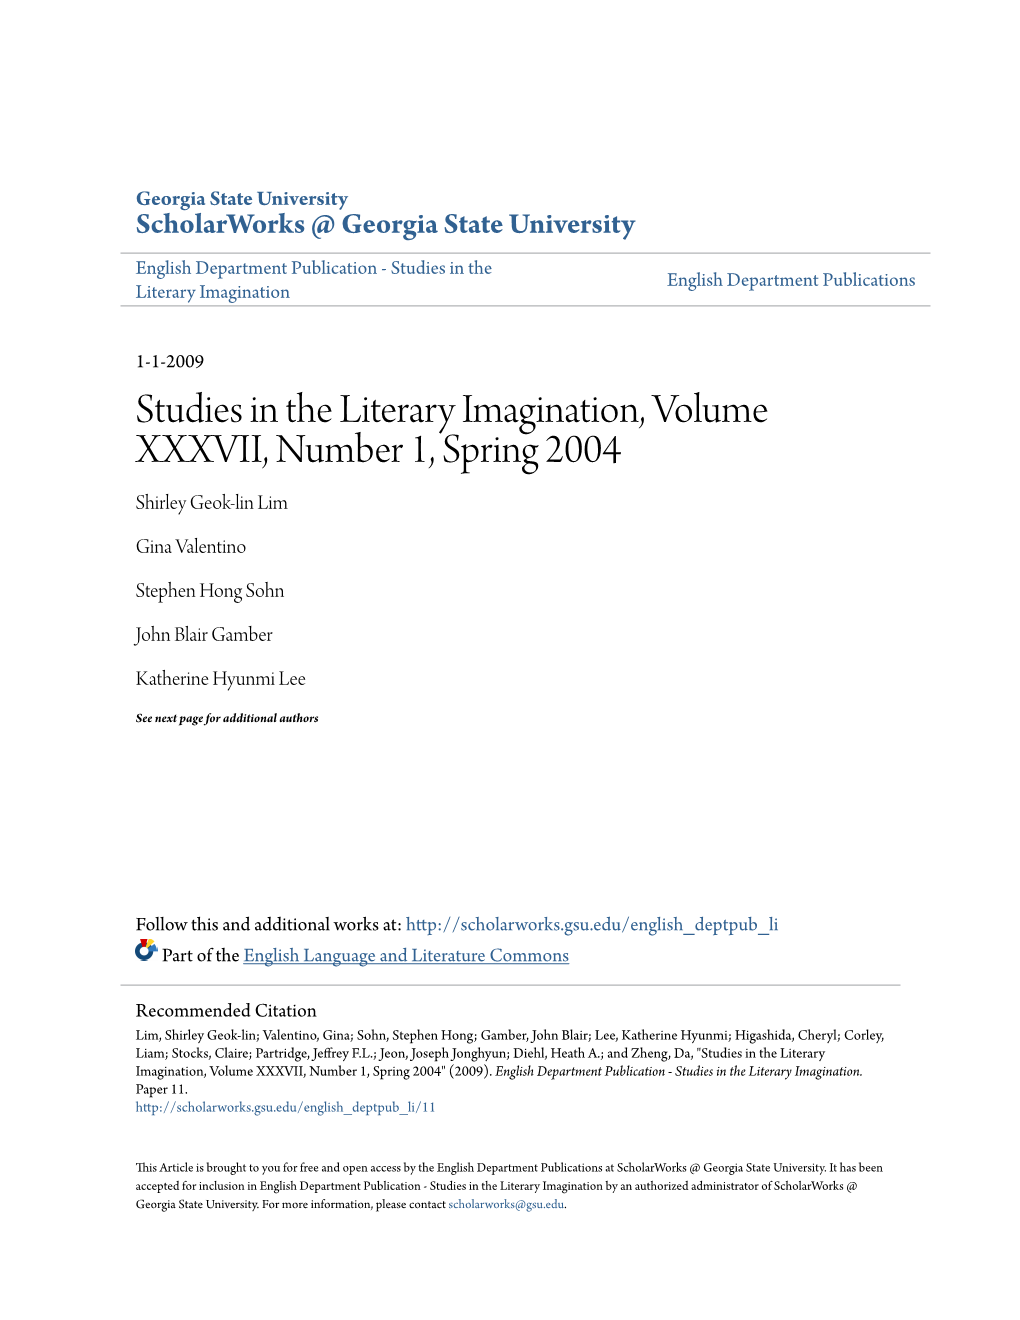 Studies in the Literary Imagination, Volume XXXVII, Number 1, Spring 2004 Shirley Geok-Lin Lim